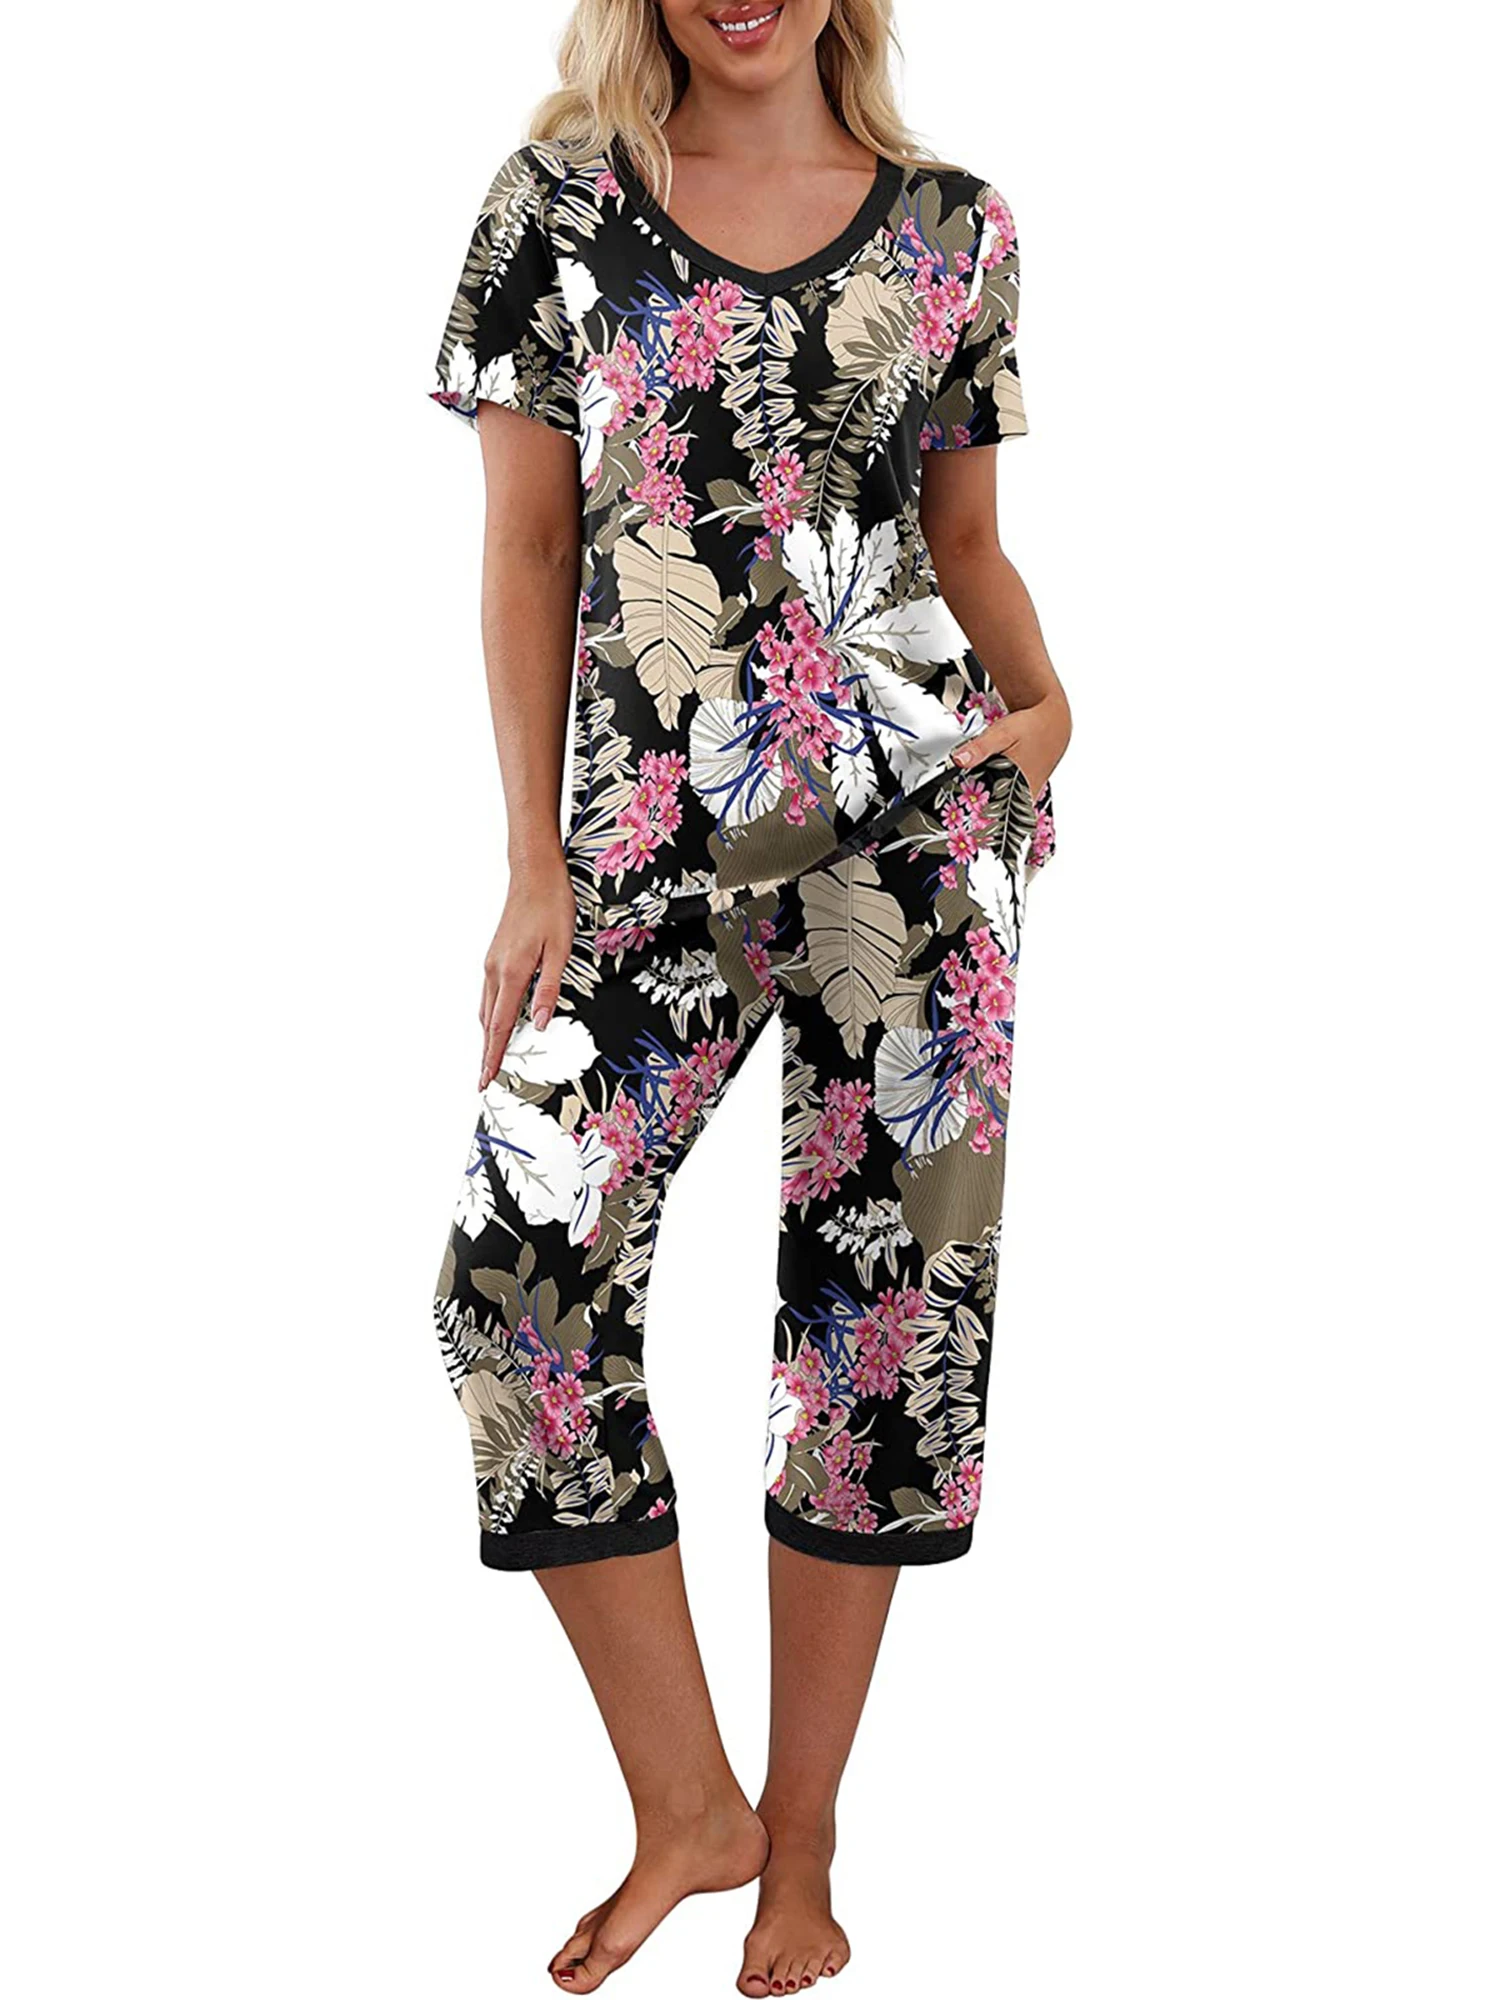 

Women s Floral Print Short Sleeve Pajama Set with Elastic Capri Pants - Comfortable Loungewear for Soft Sleepwear and Nightwear